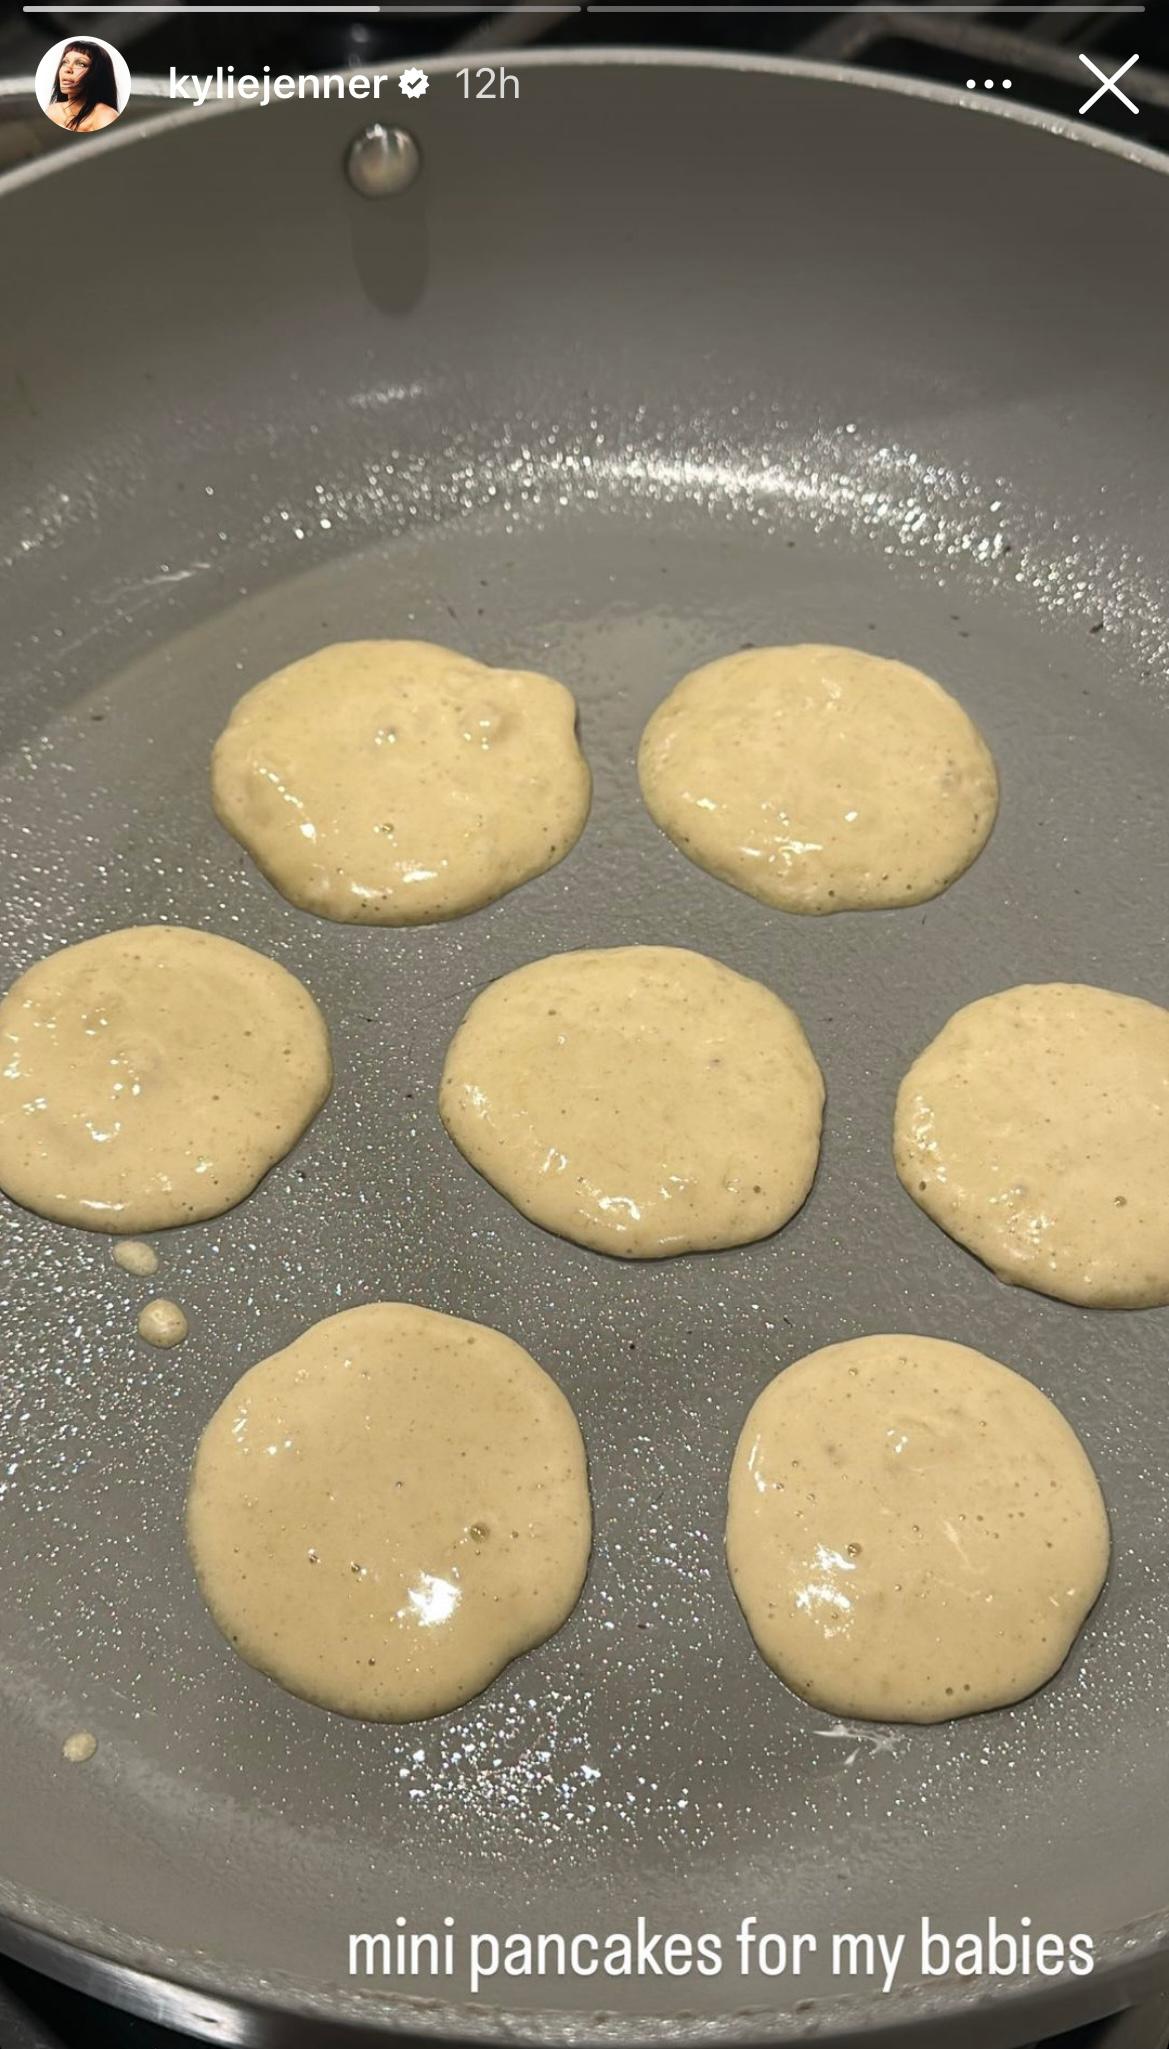 Kylie Jenner makes pancake